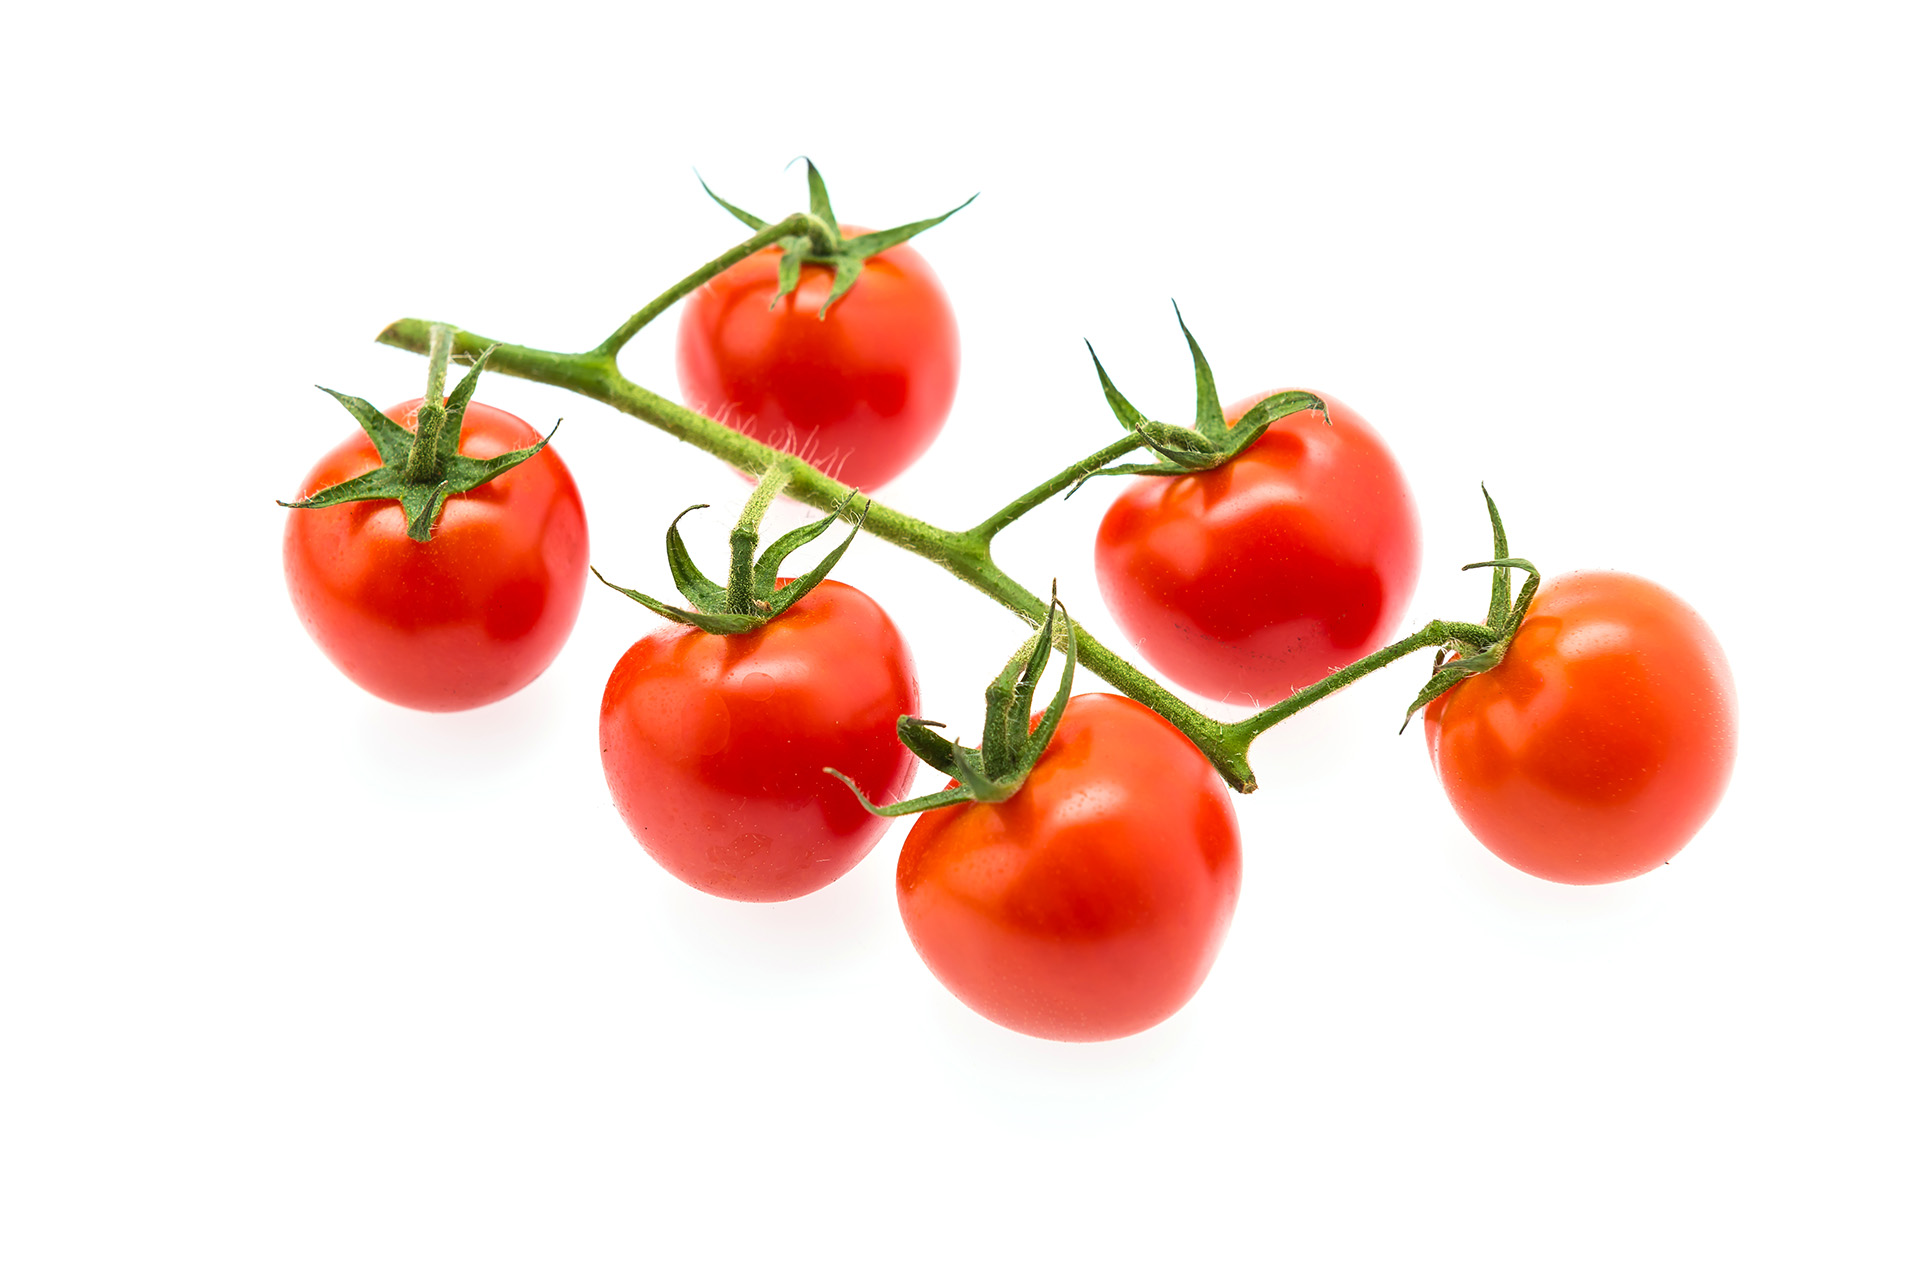 Tomate-cherry-rama-bio.-Cultivo-ecologico-en-Almeria.jpg